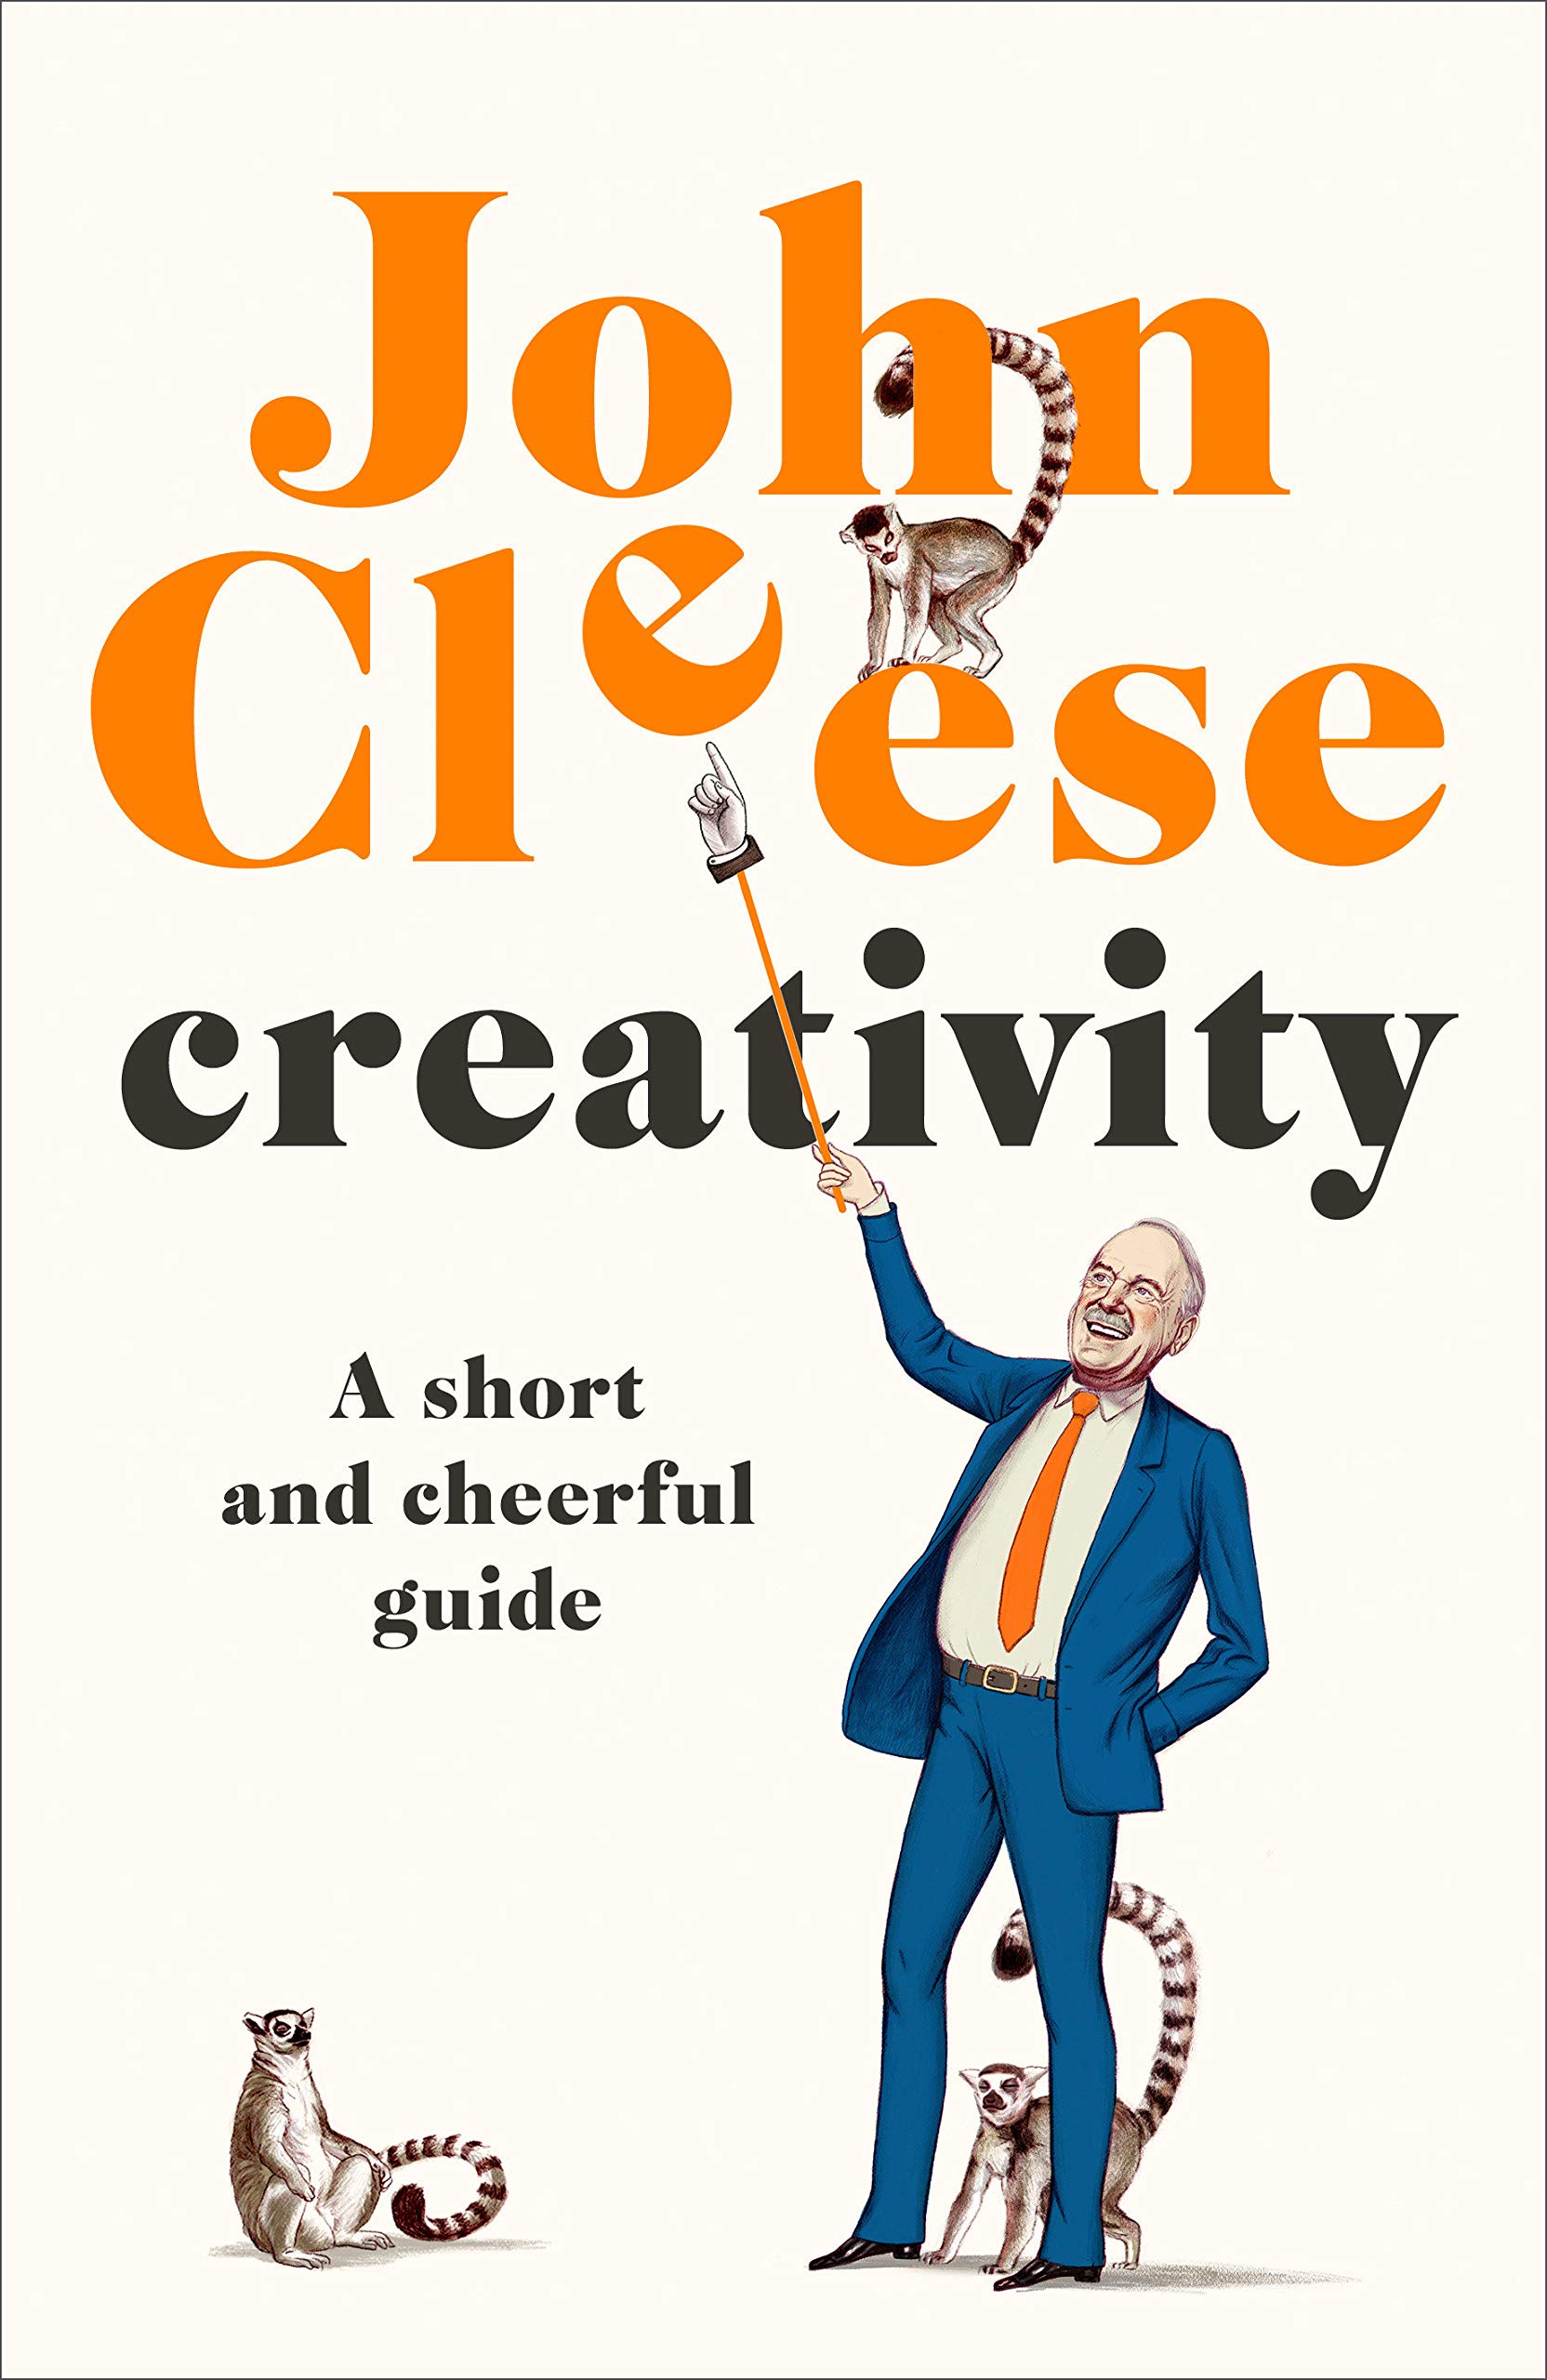 Of God Brewery tunnel Creativity - John Cleese